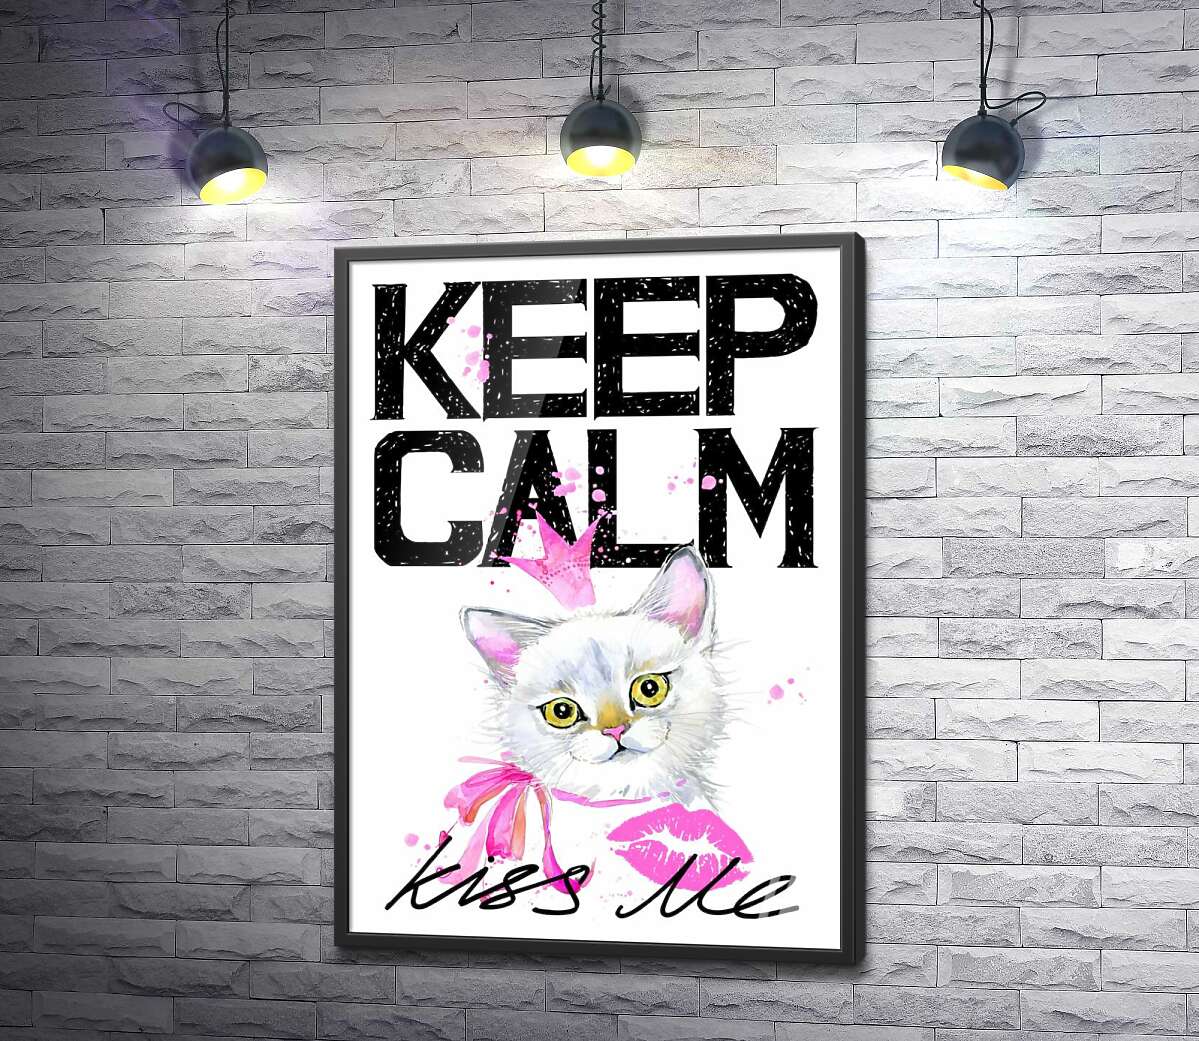 постер Біла кішка-принцеса серед напису "keep calm and kiss me"